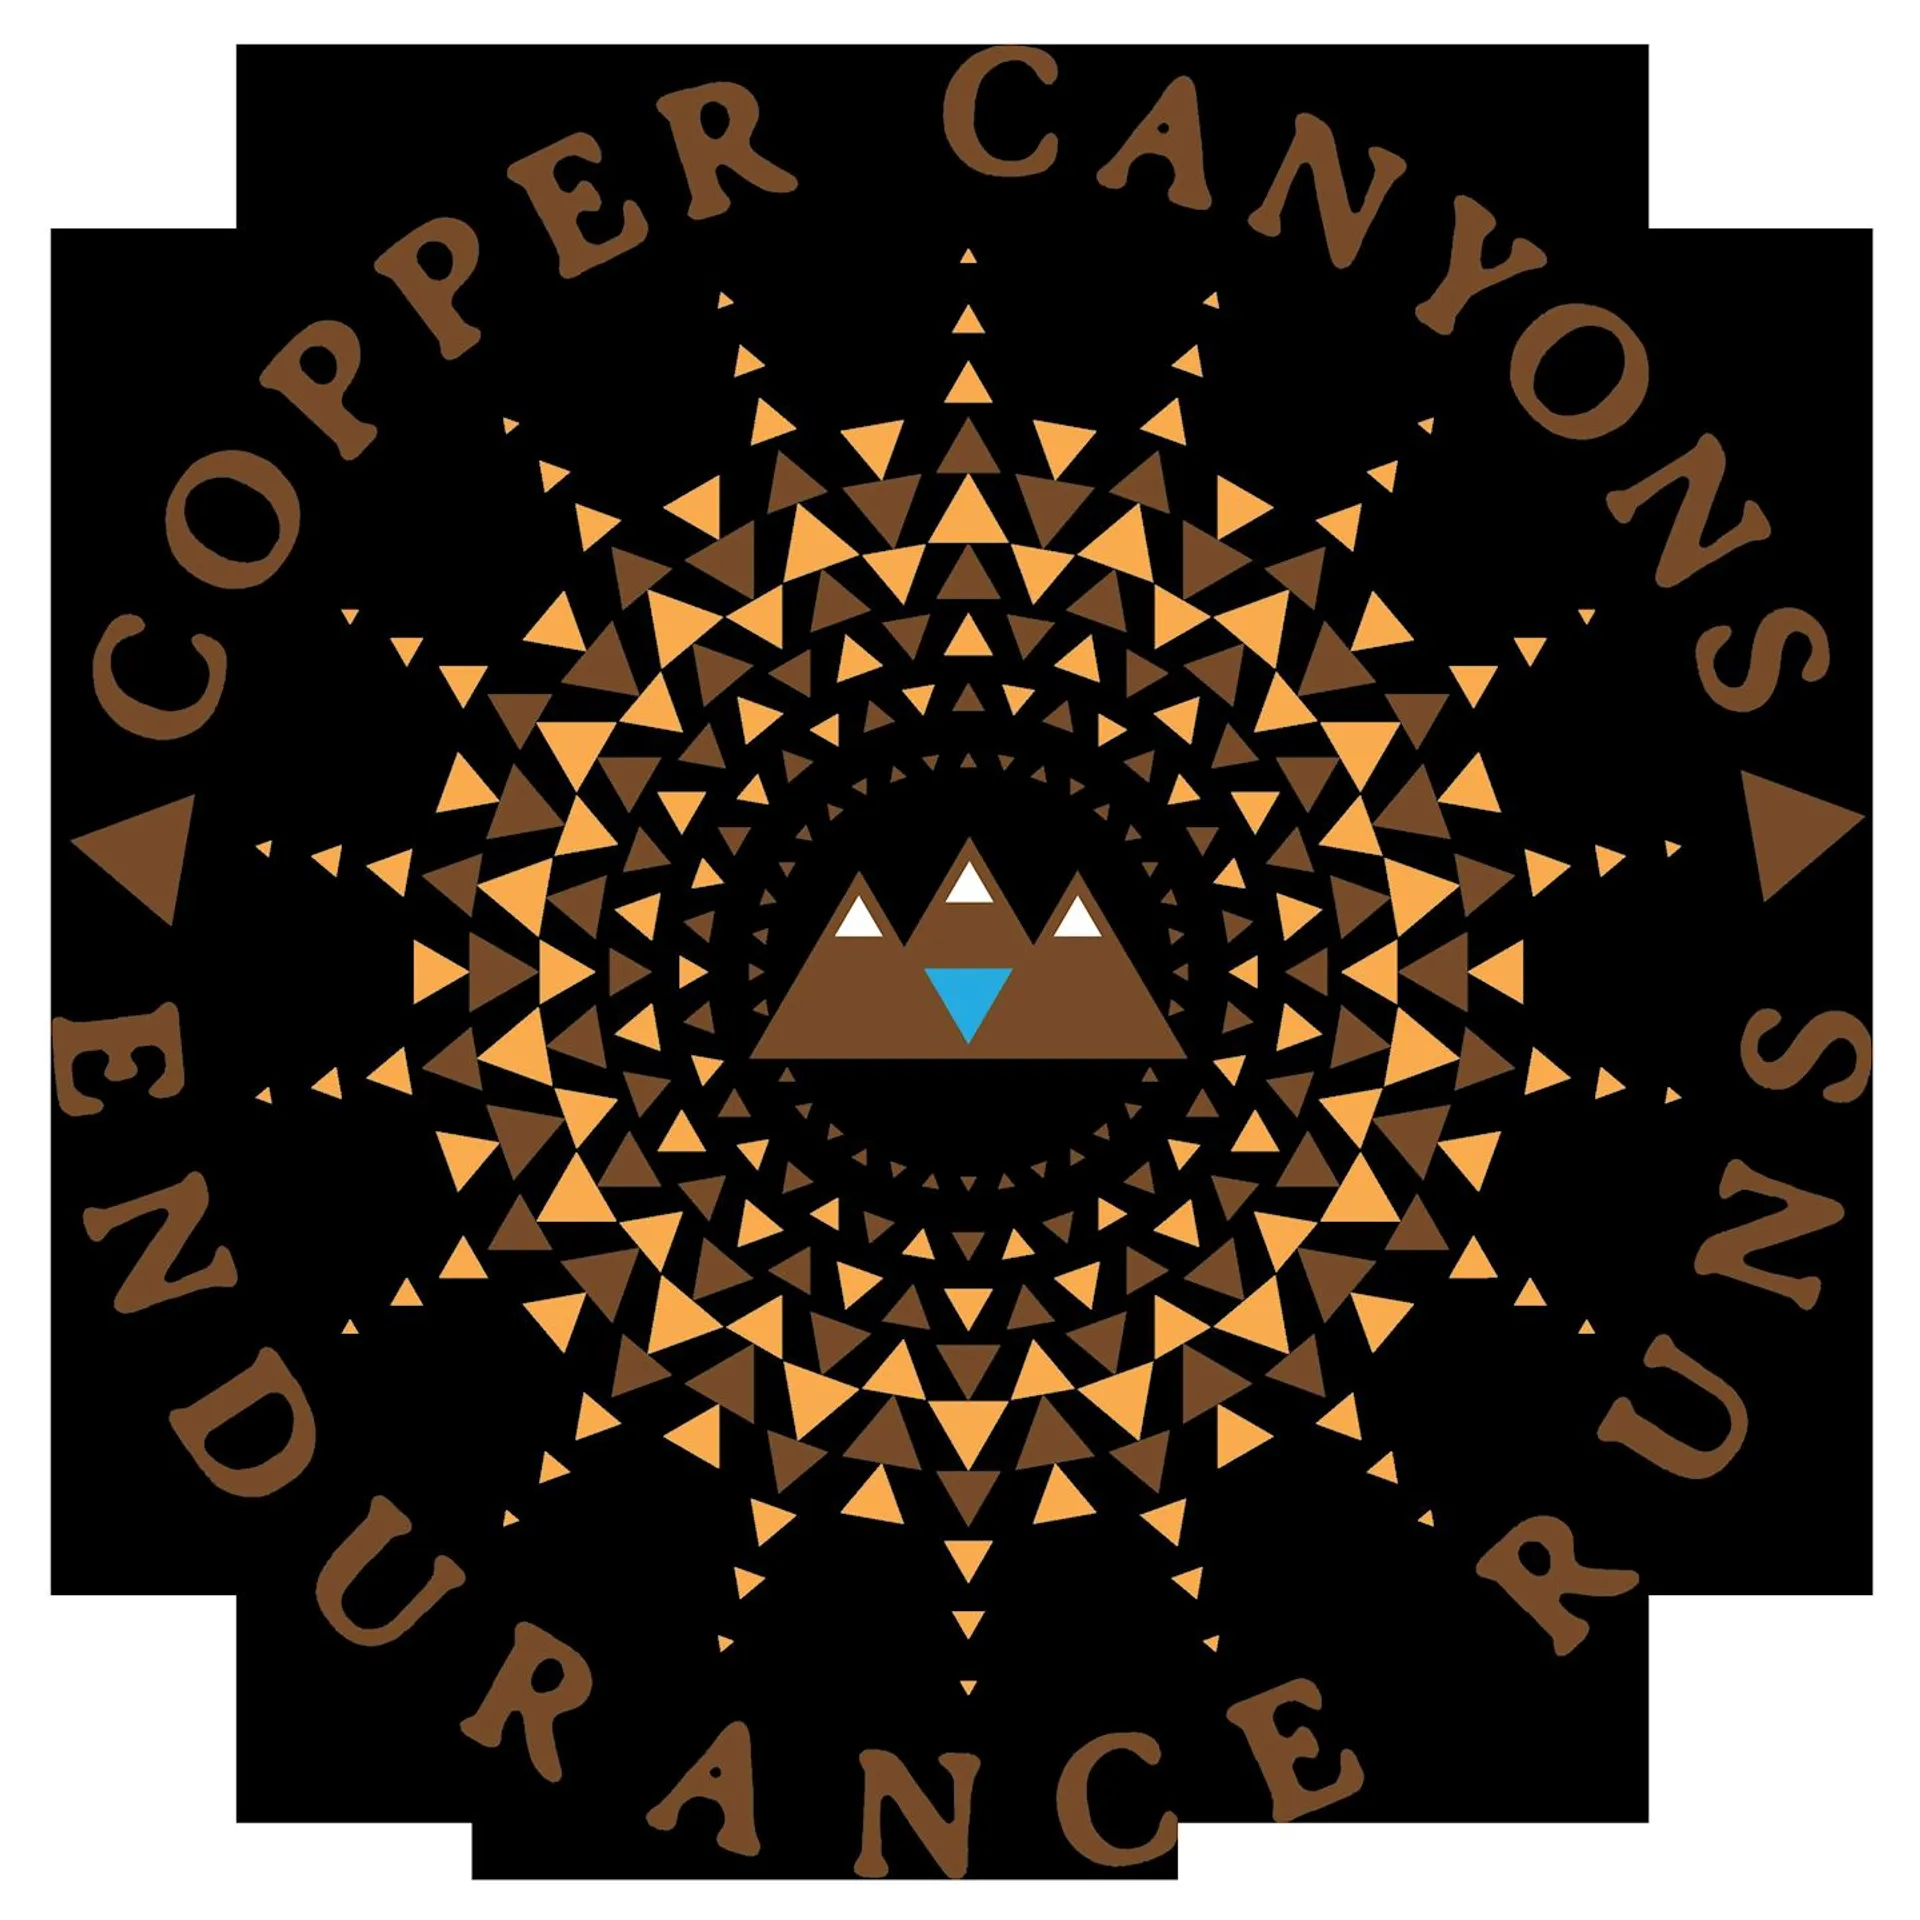 Copper Canyons Endurance Runs